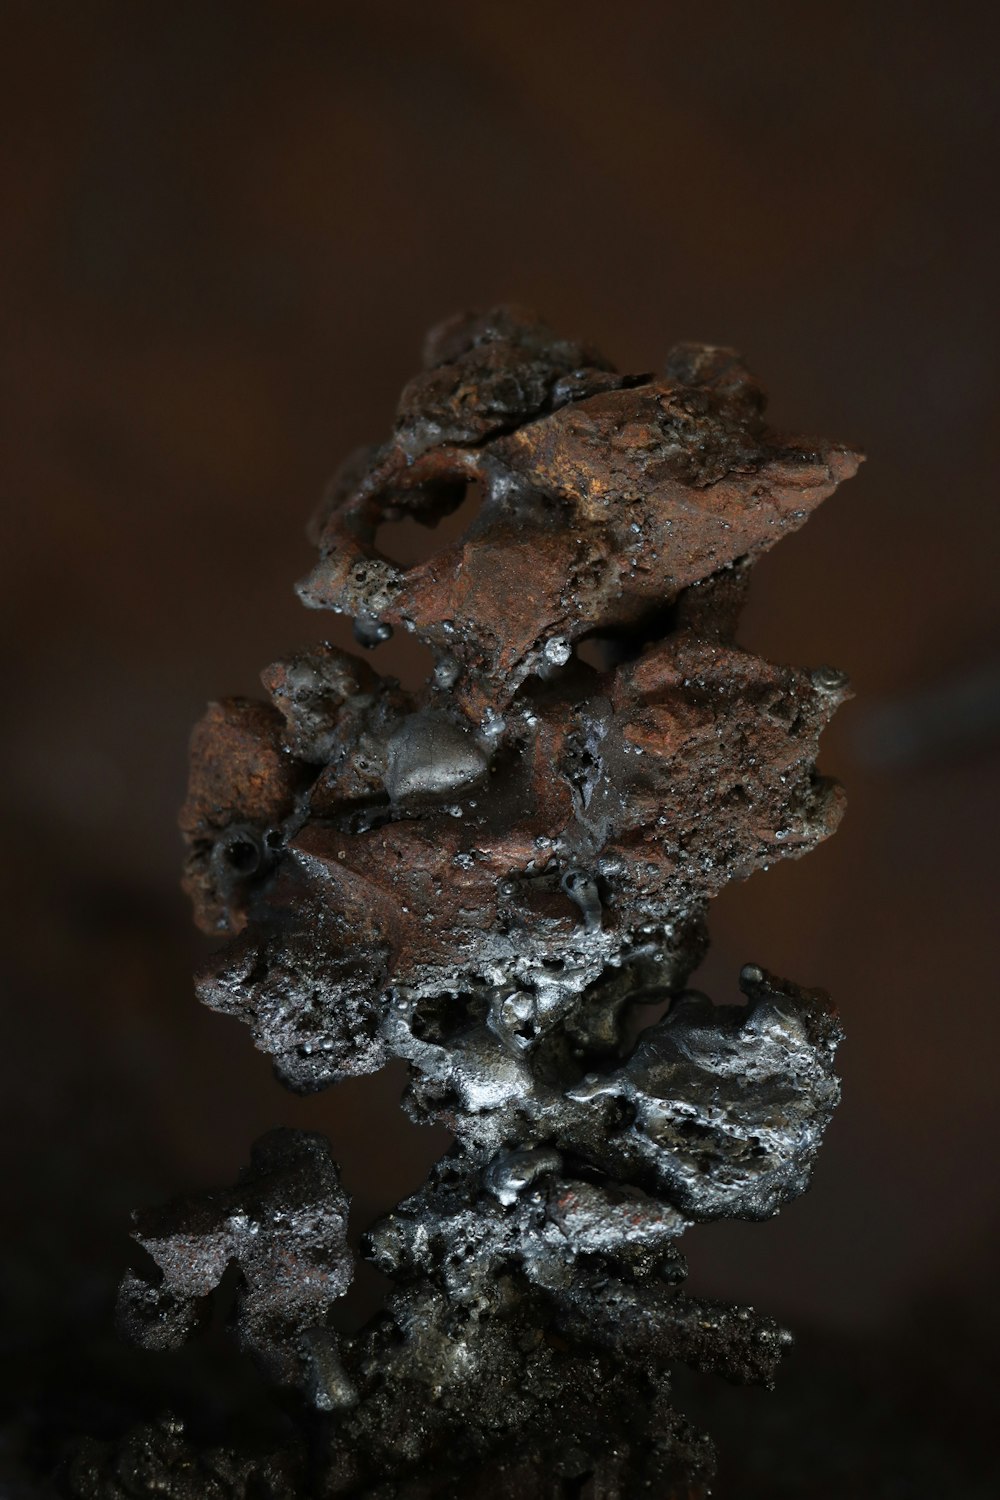 a close up of a piece of metal